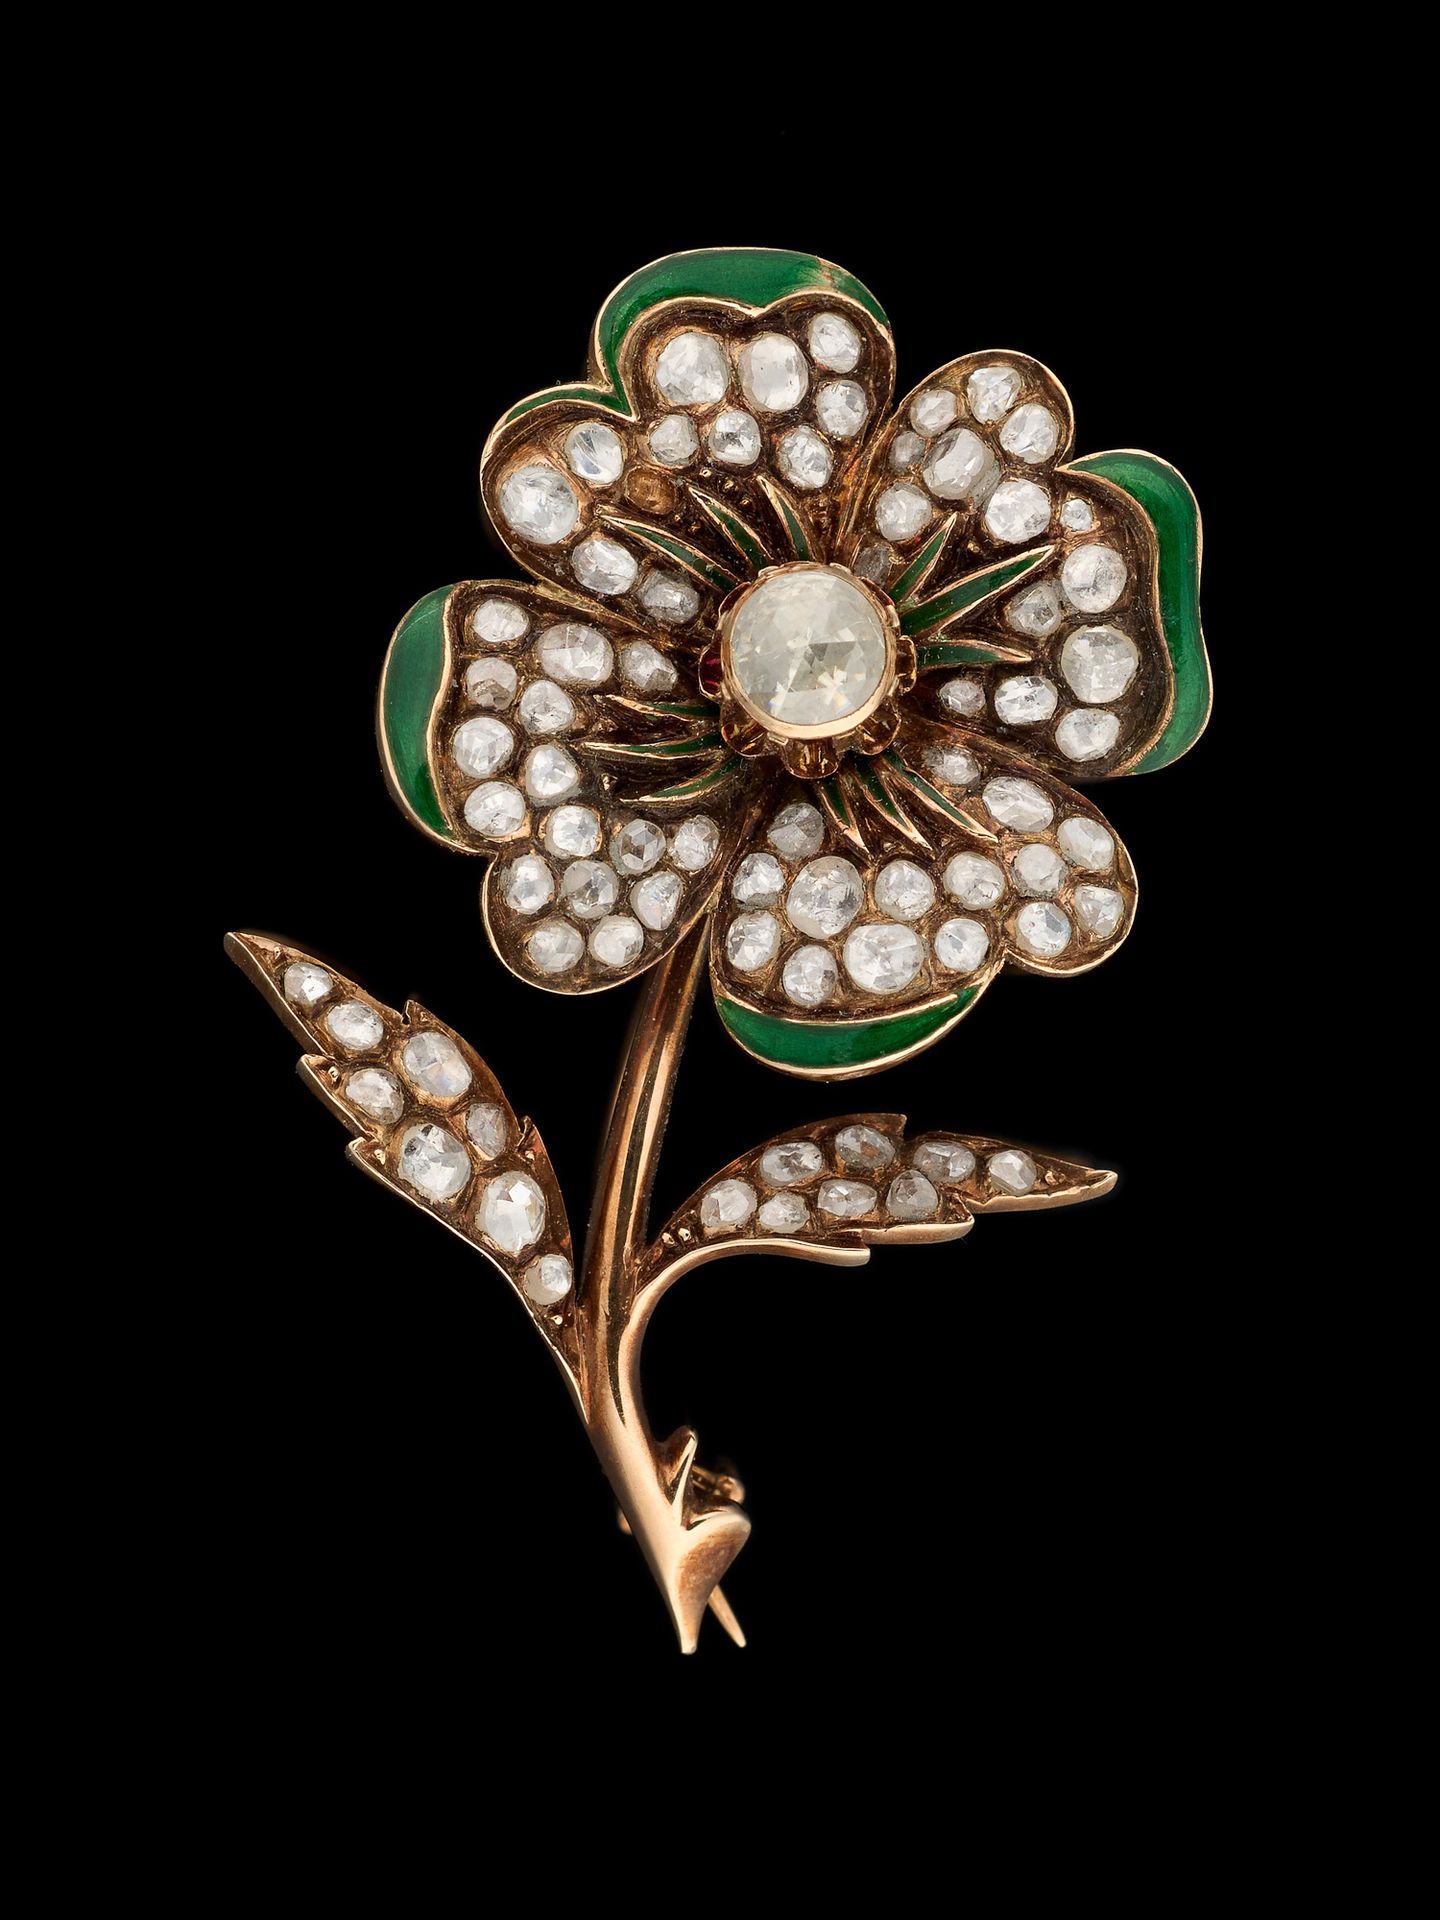 Circa 1900. 珠宝：四叶草设计的黄金胸针，饰有玫瑰切割钻石和珐琅。

尺寸：5 x 3厘米。